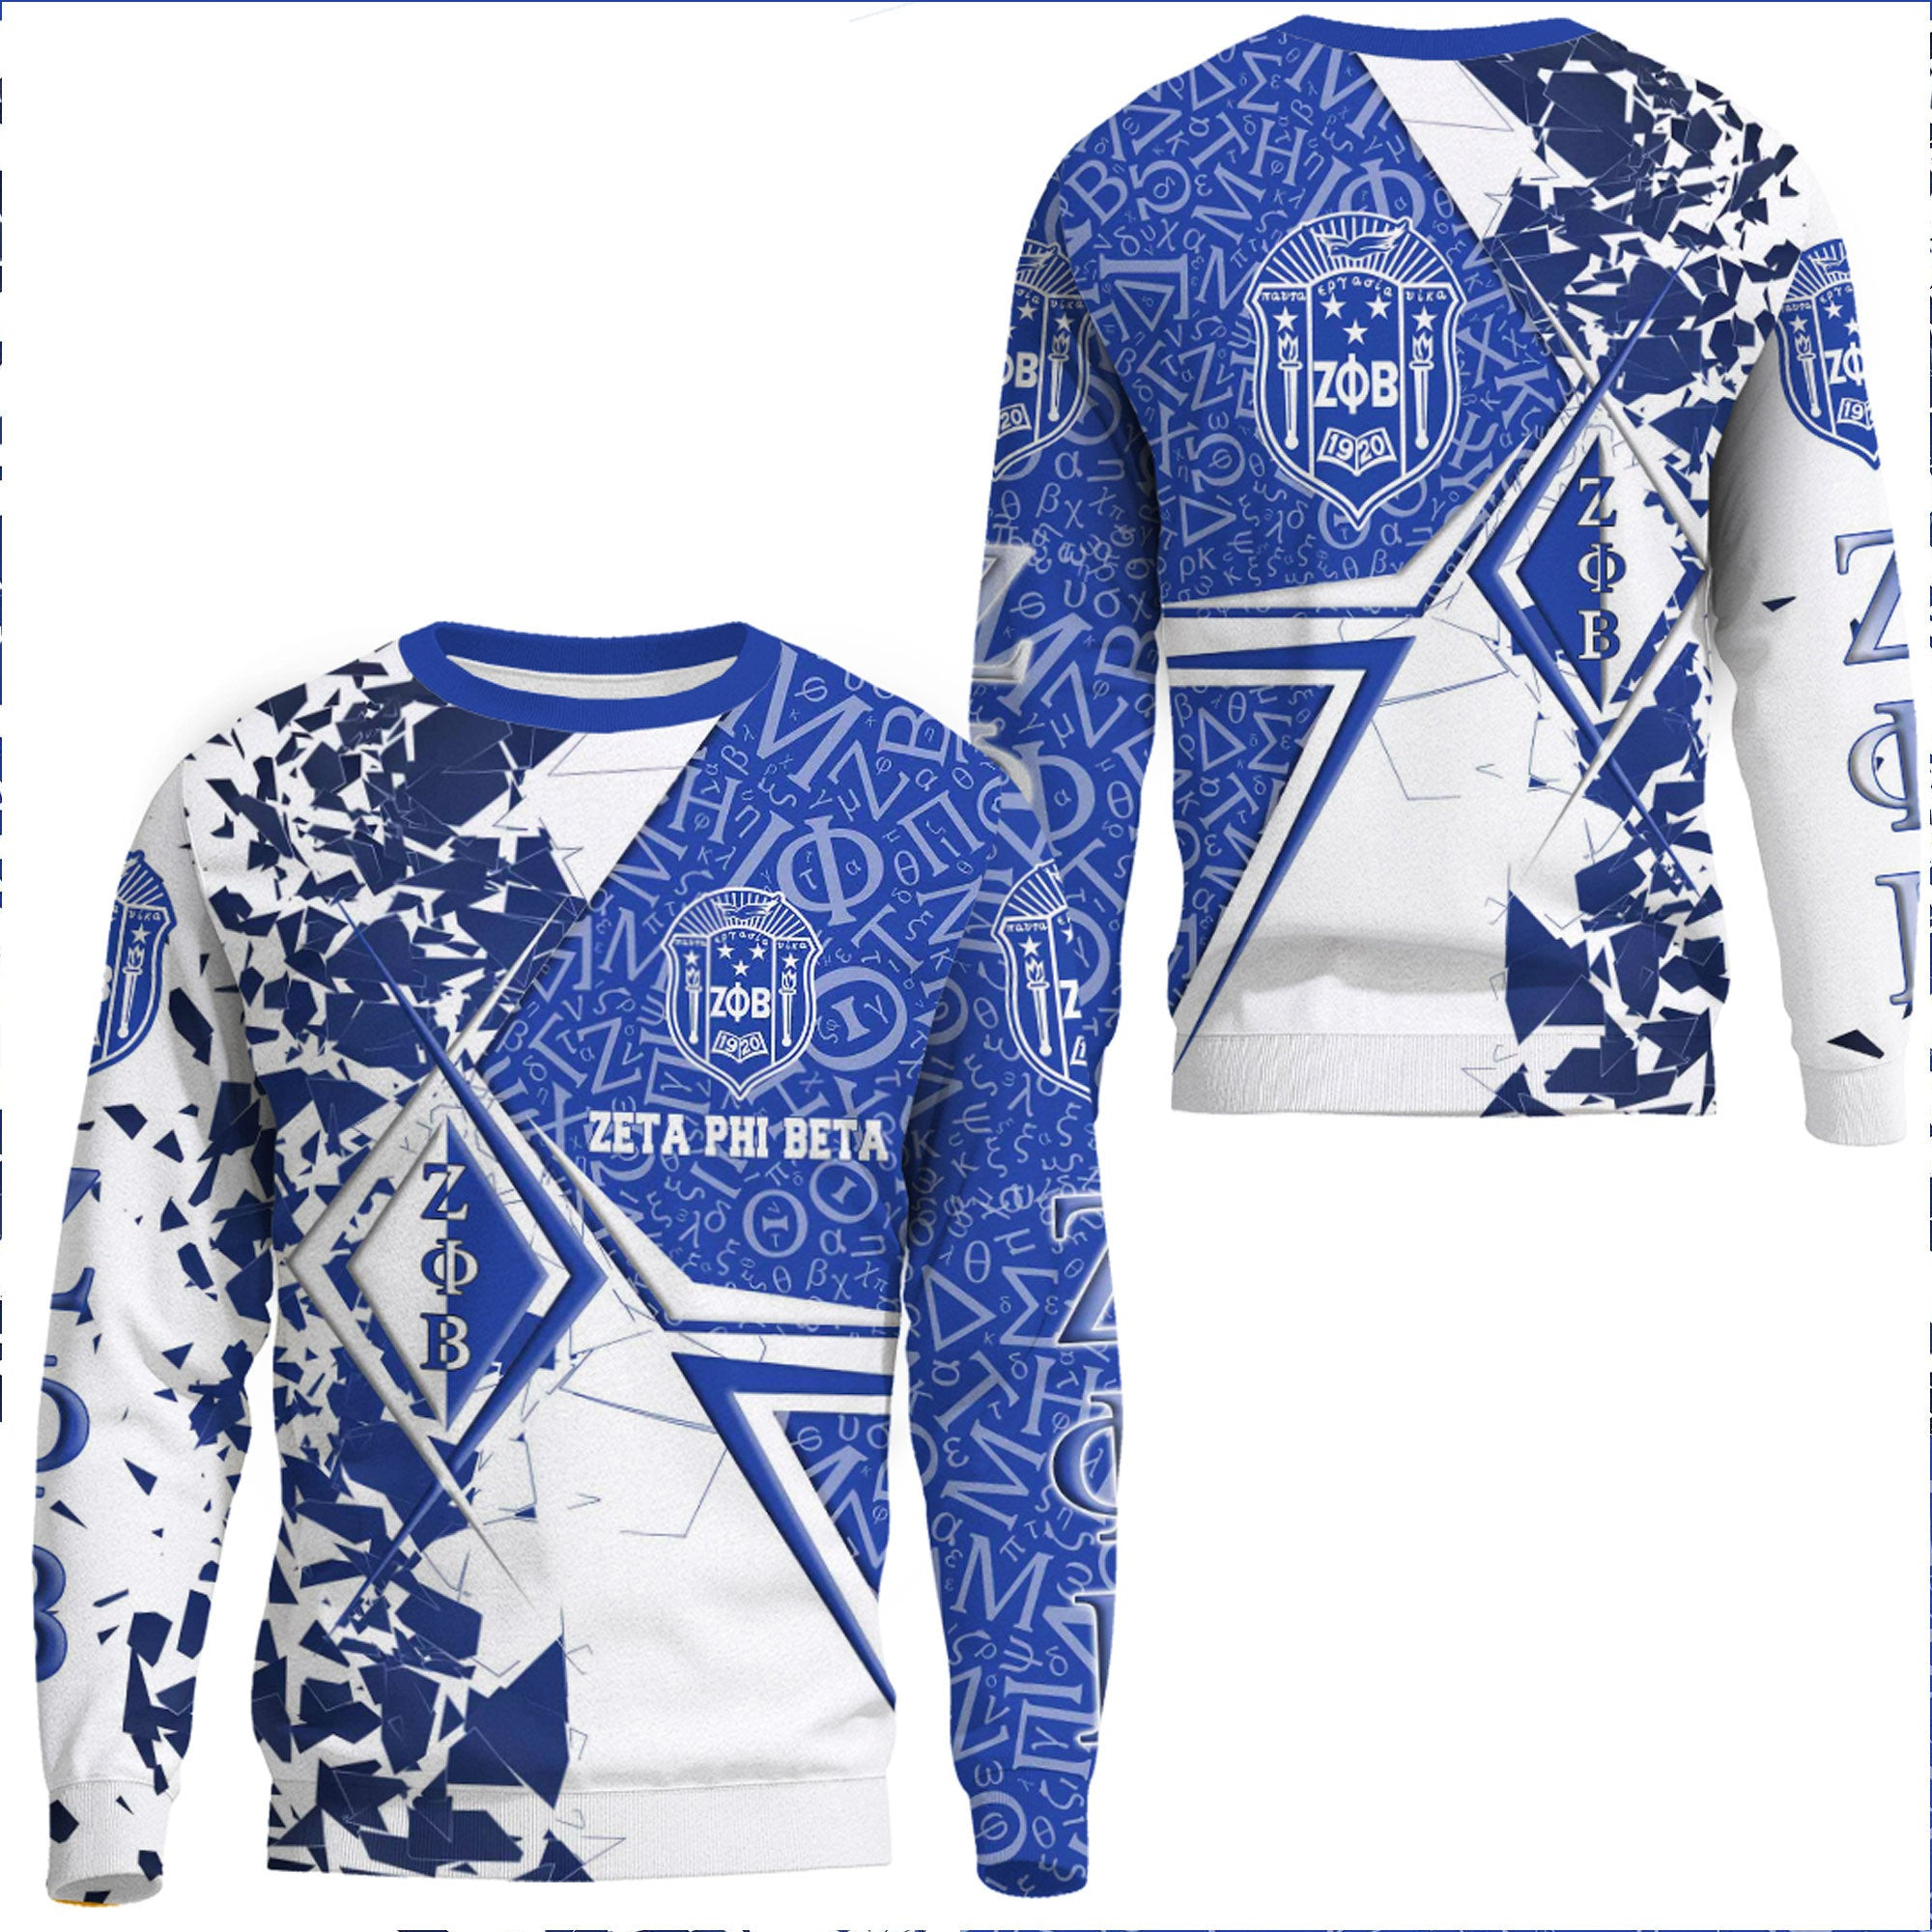 Africa Zone Clothing – Zeta Phi Beta Legend Sweatshirts A35